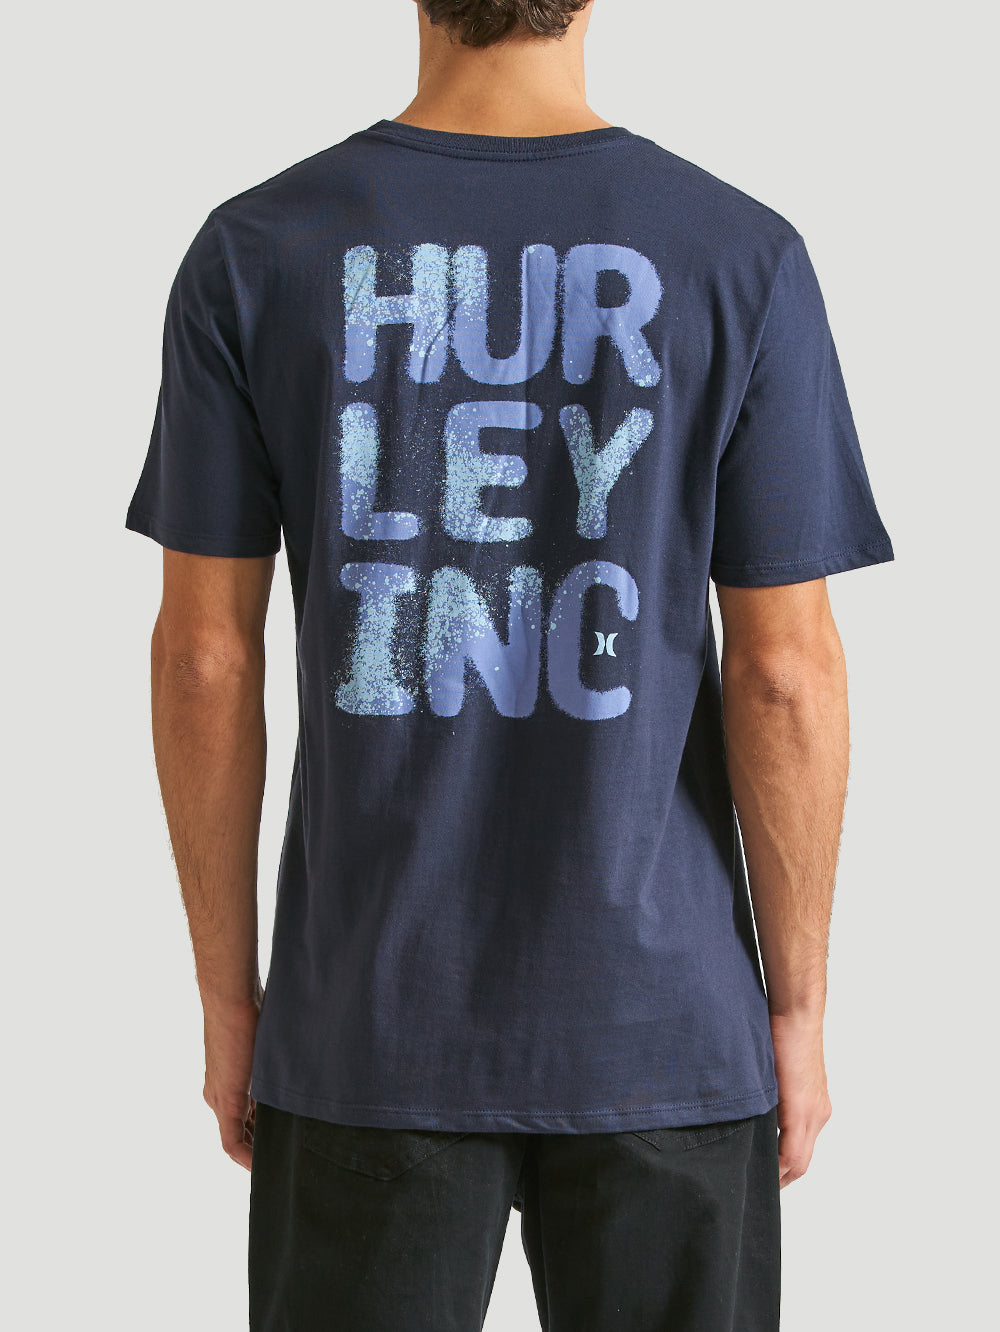 Camiseta Hurley Noise Marinho